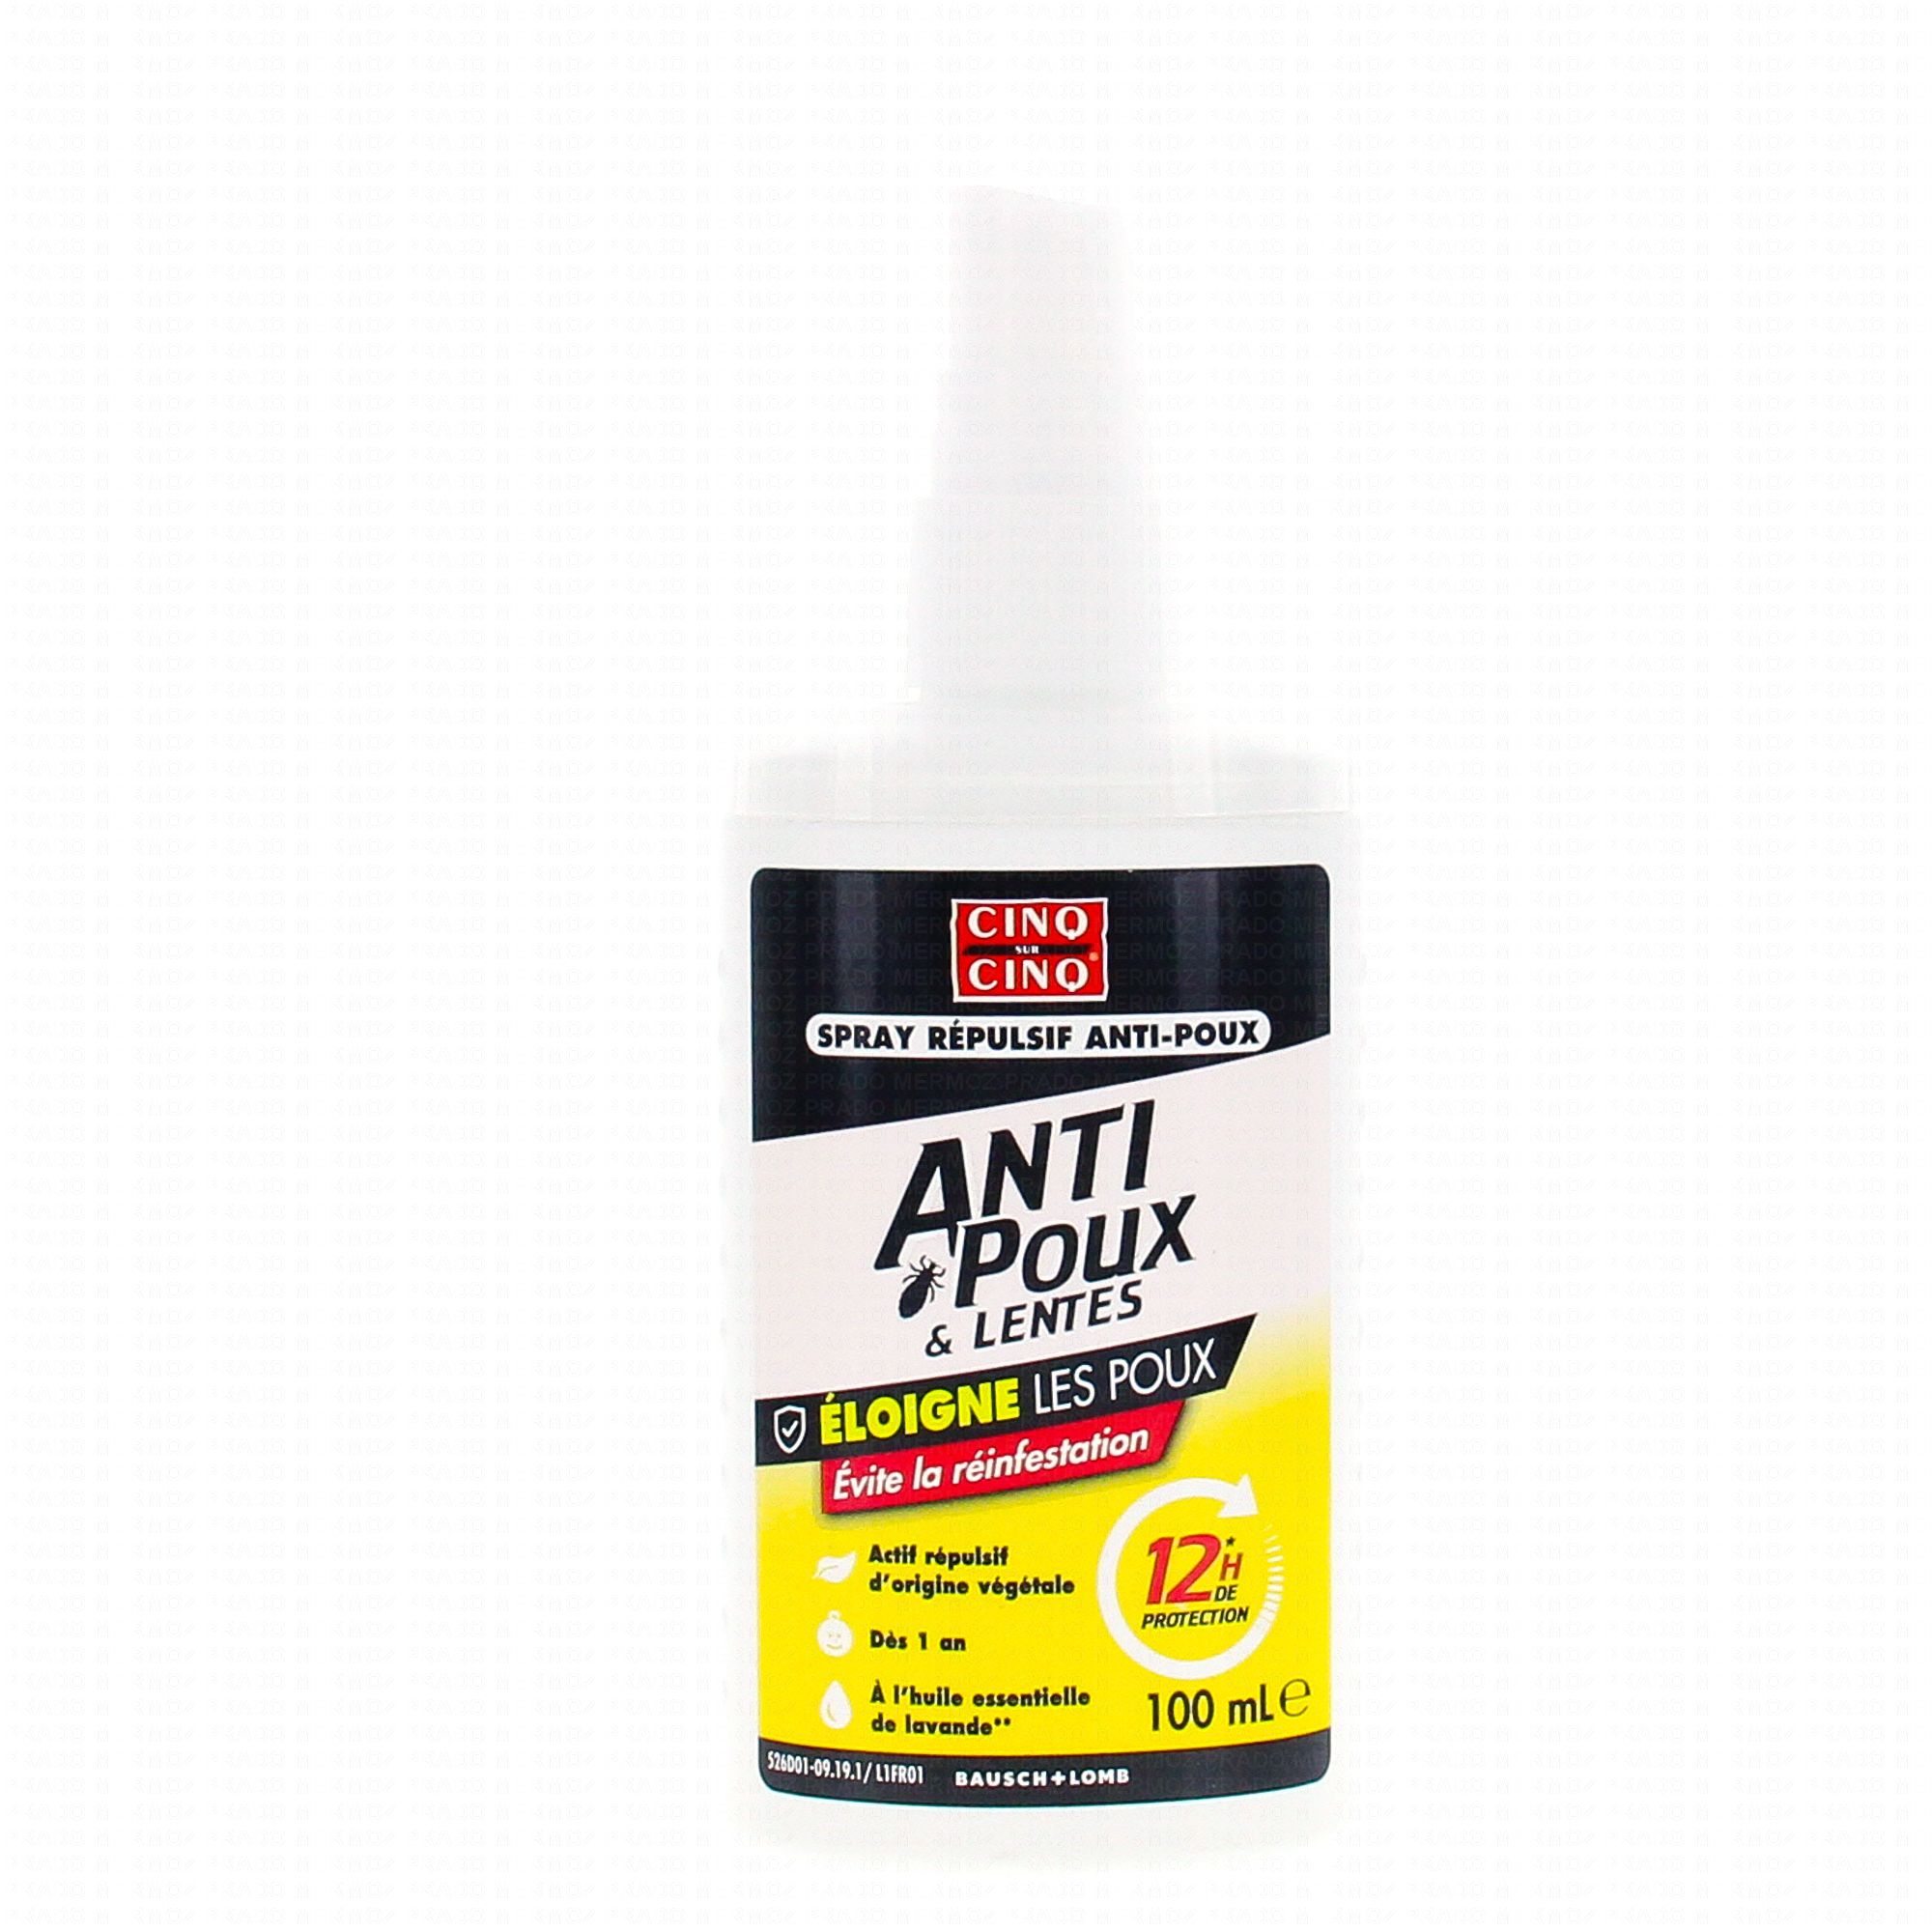 CINQ SUR CINQ anti-poux spray répulsif 100ml - Parapharmacie Prado Mermoz